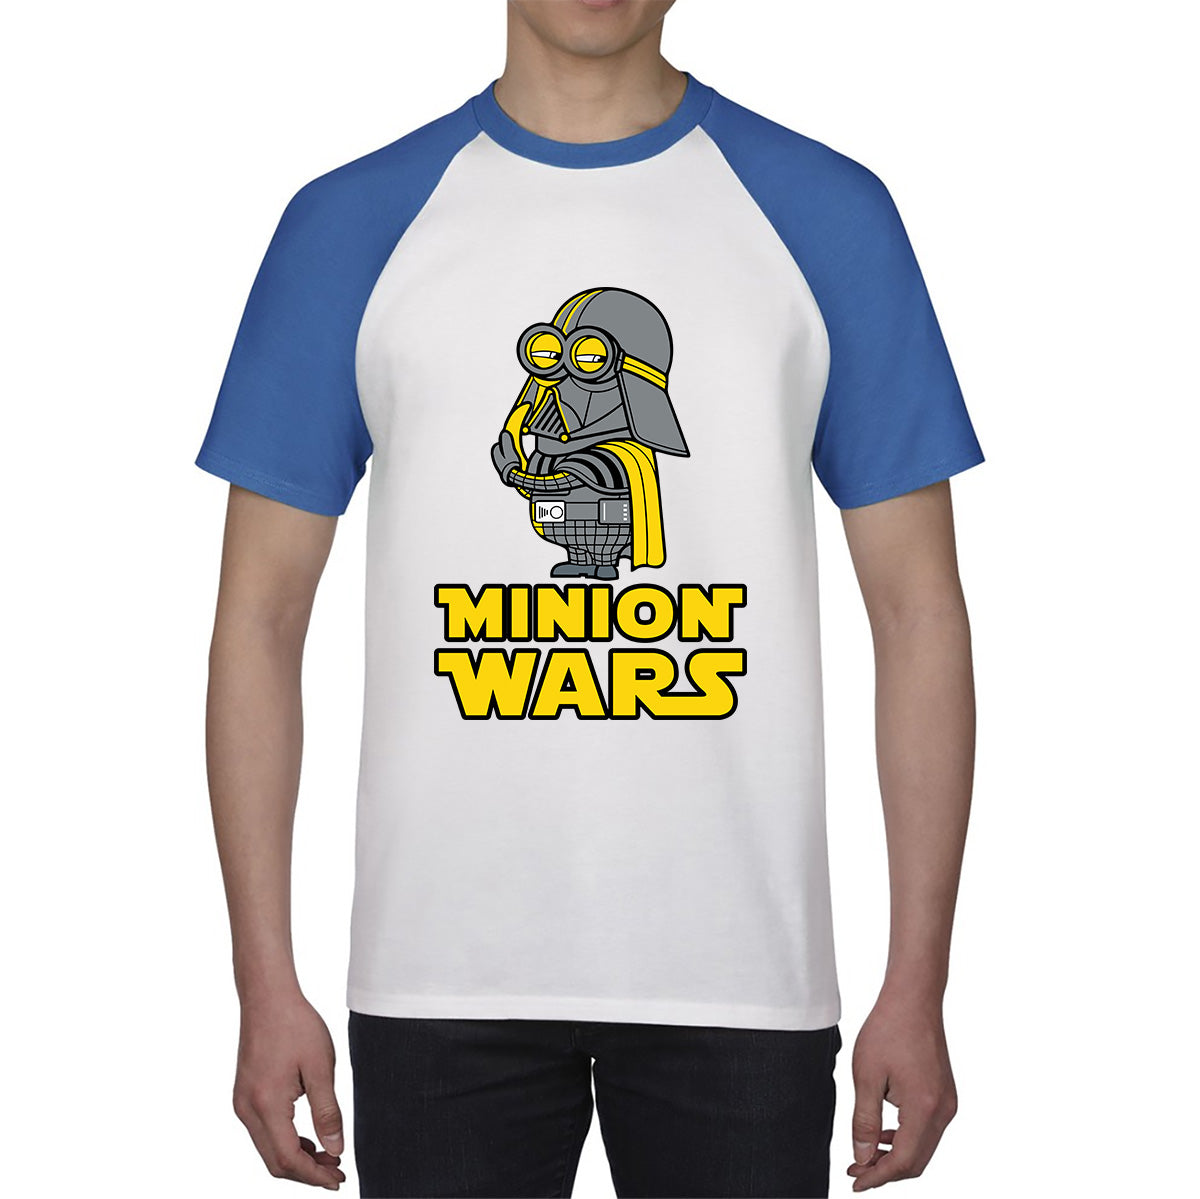 Minion Wars Trooper Cosplay Star Wars Minion Parody The Minions Become Superheroes Disney Star Wars 46th Anniversary Baseball T Shirt